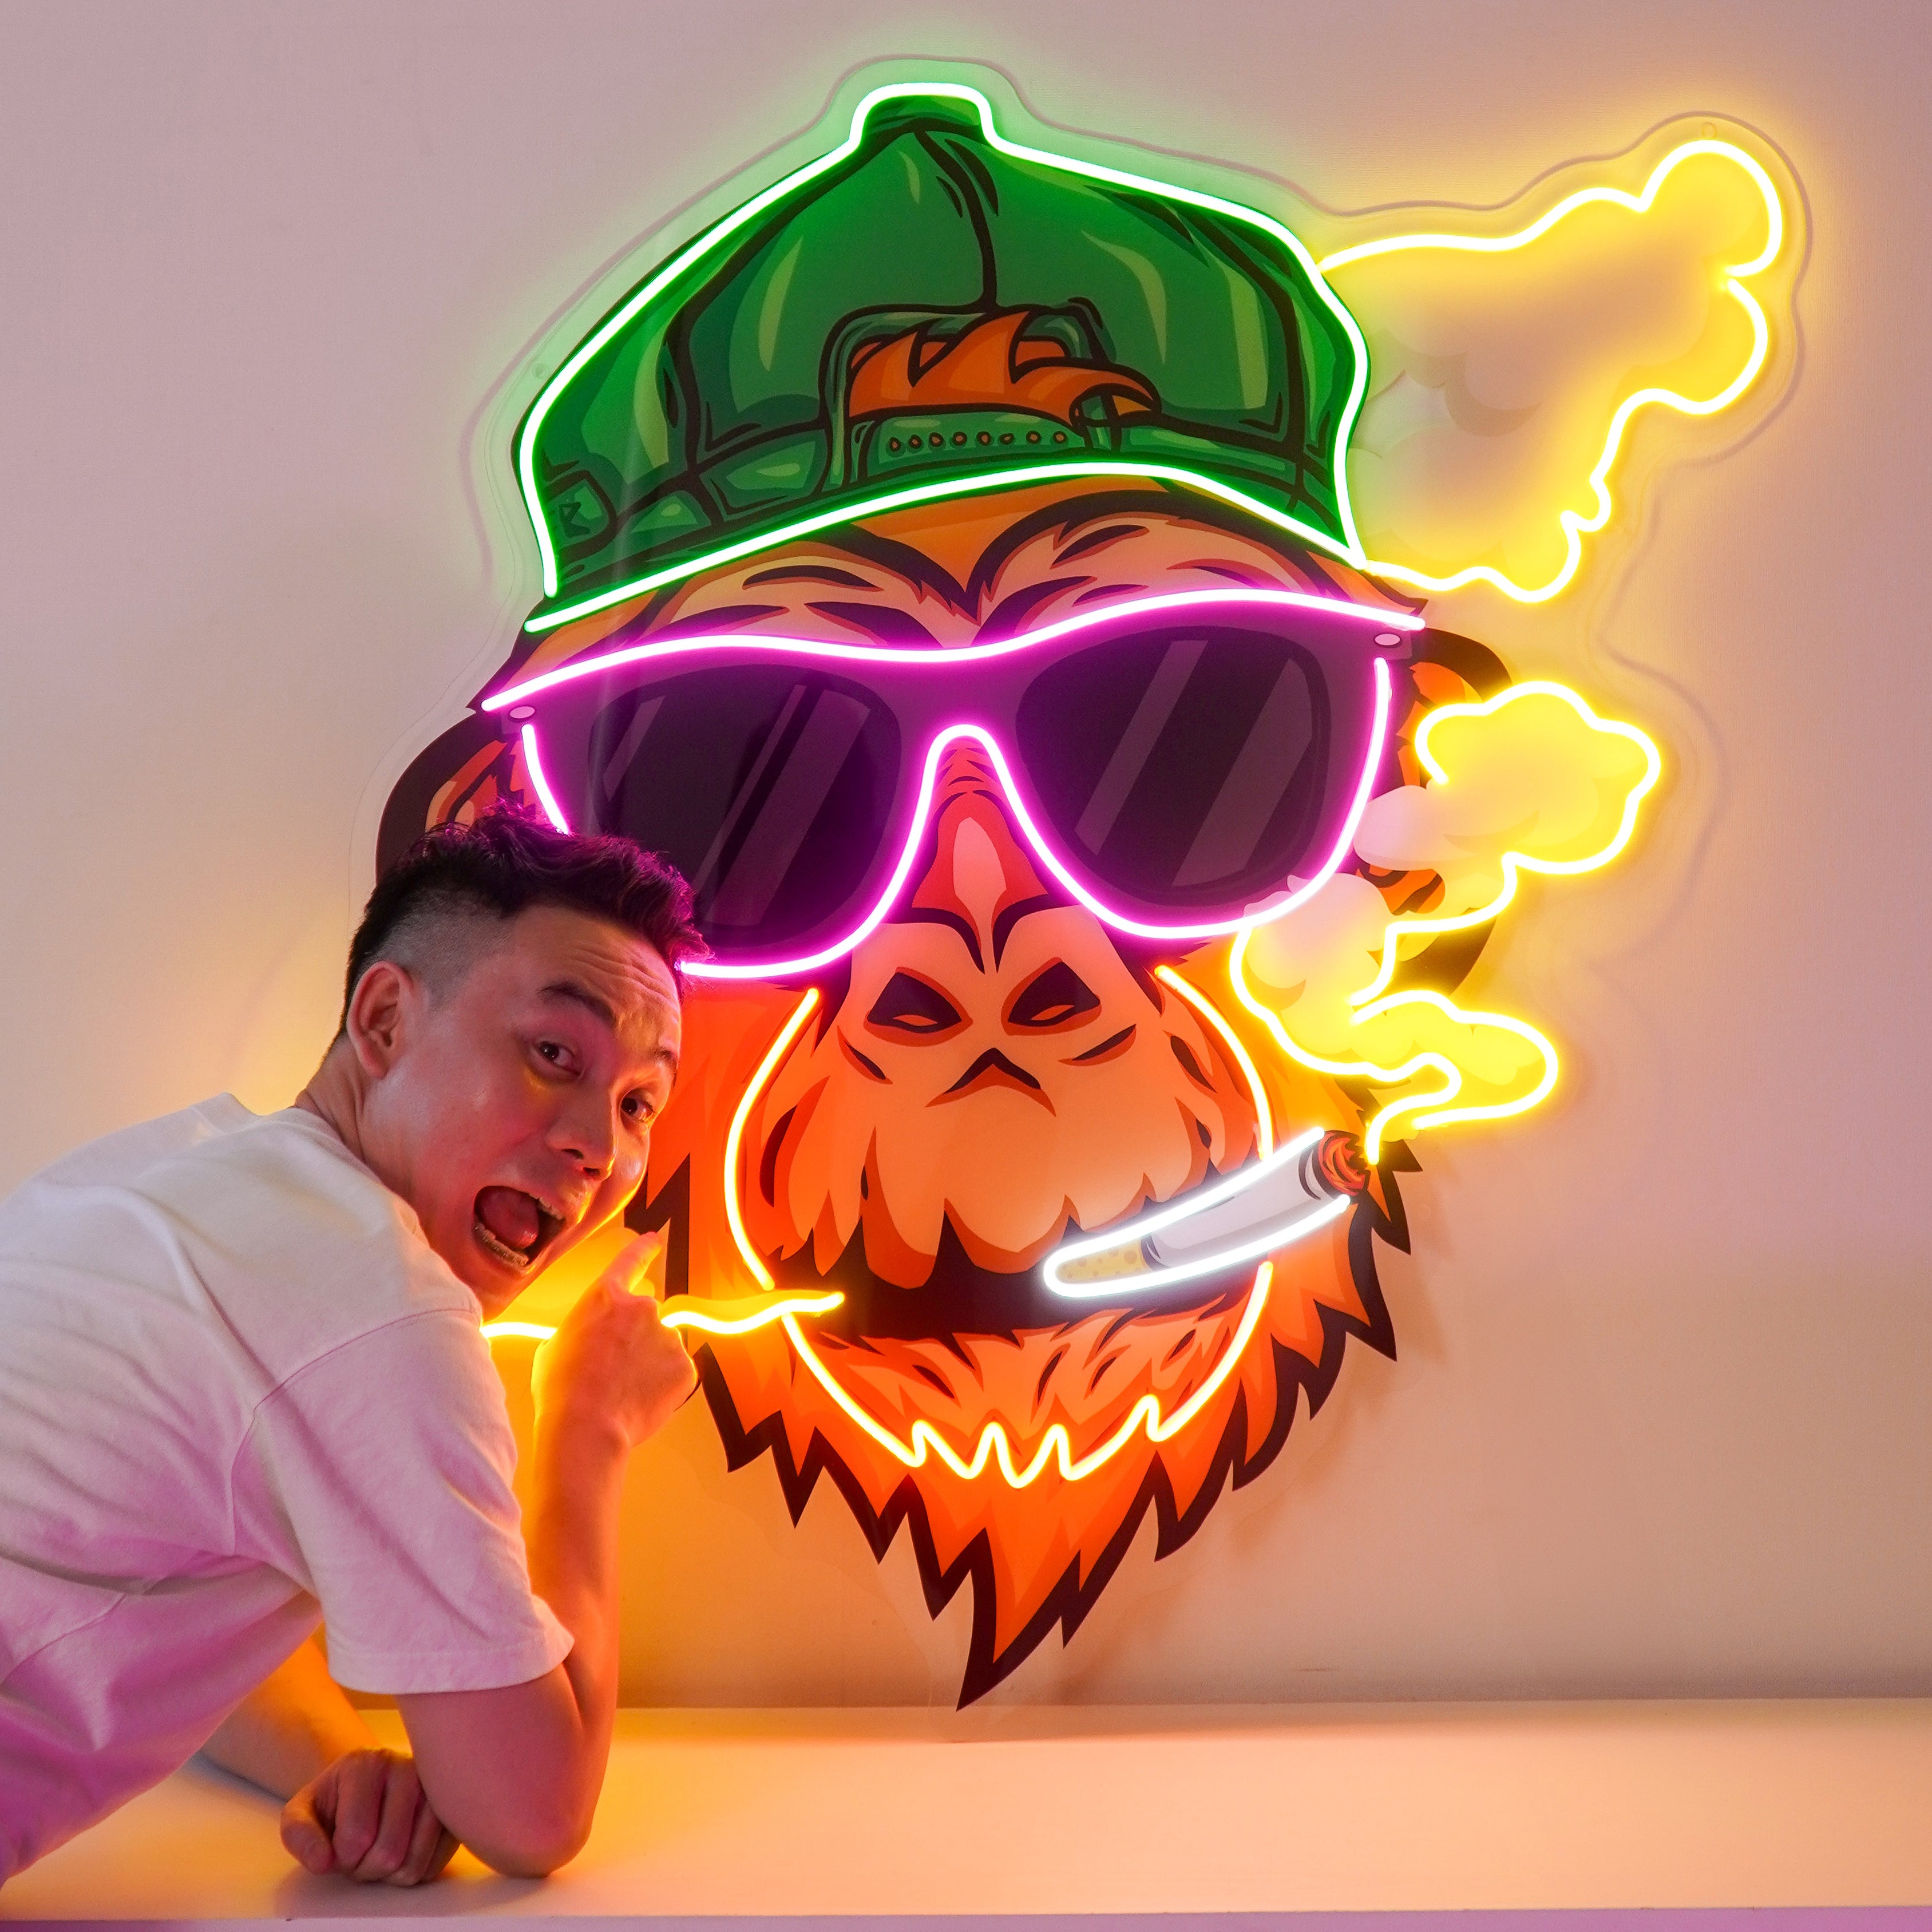 Monkey Smoking Cigar LED Neon Sign Light Pop Art